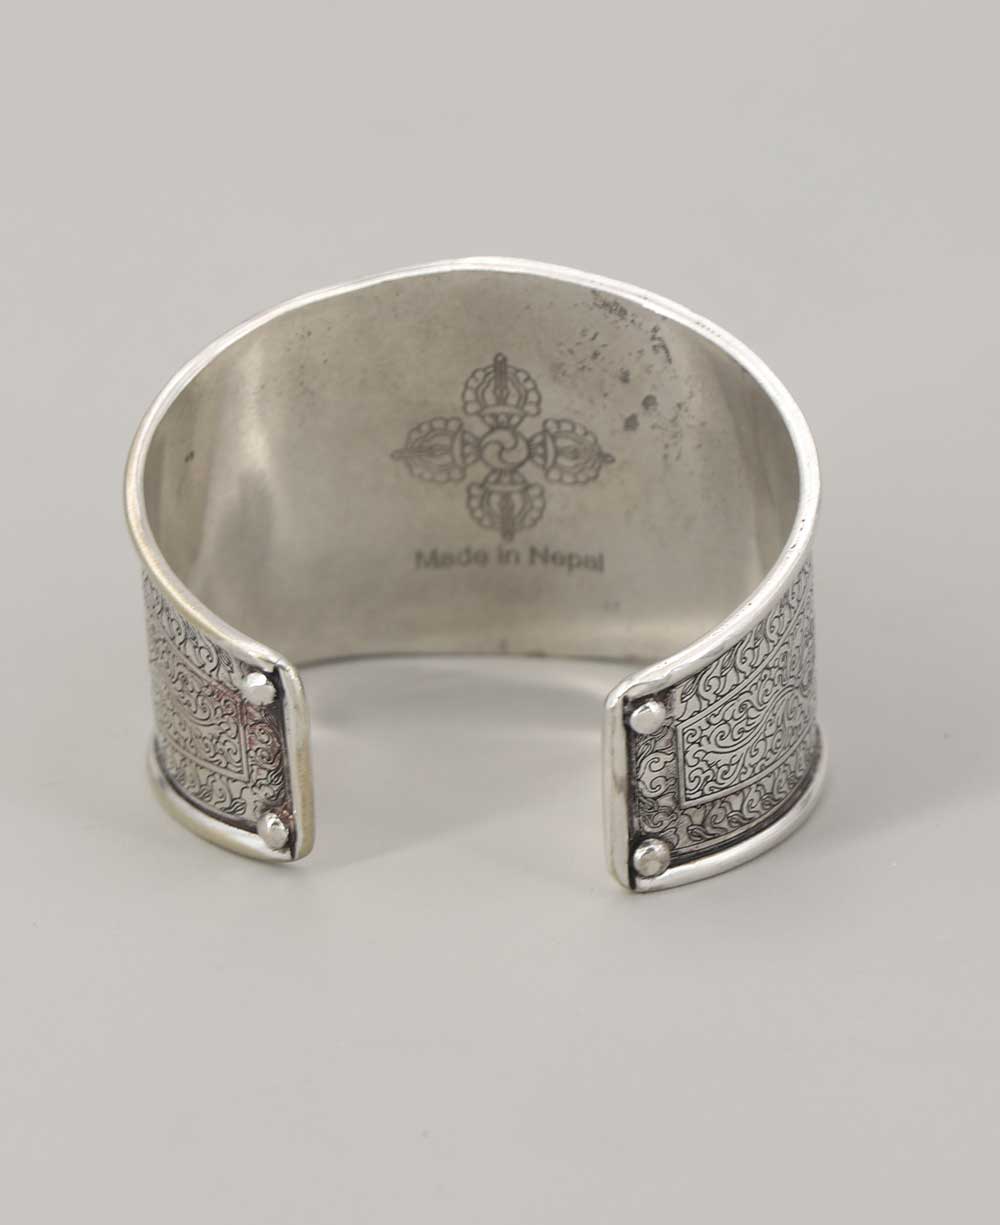 Antique Personalized Sterling Silver Medical Bracelet